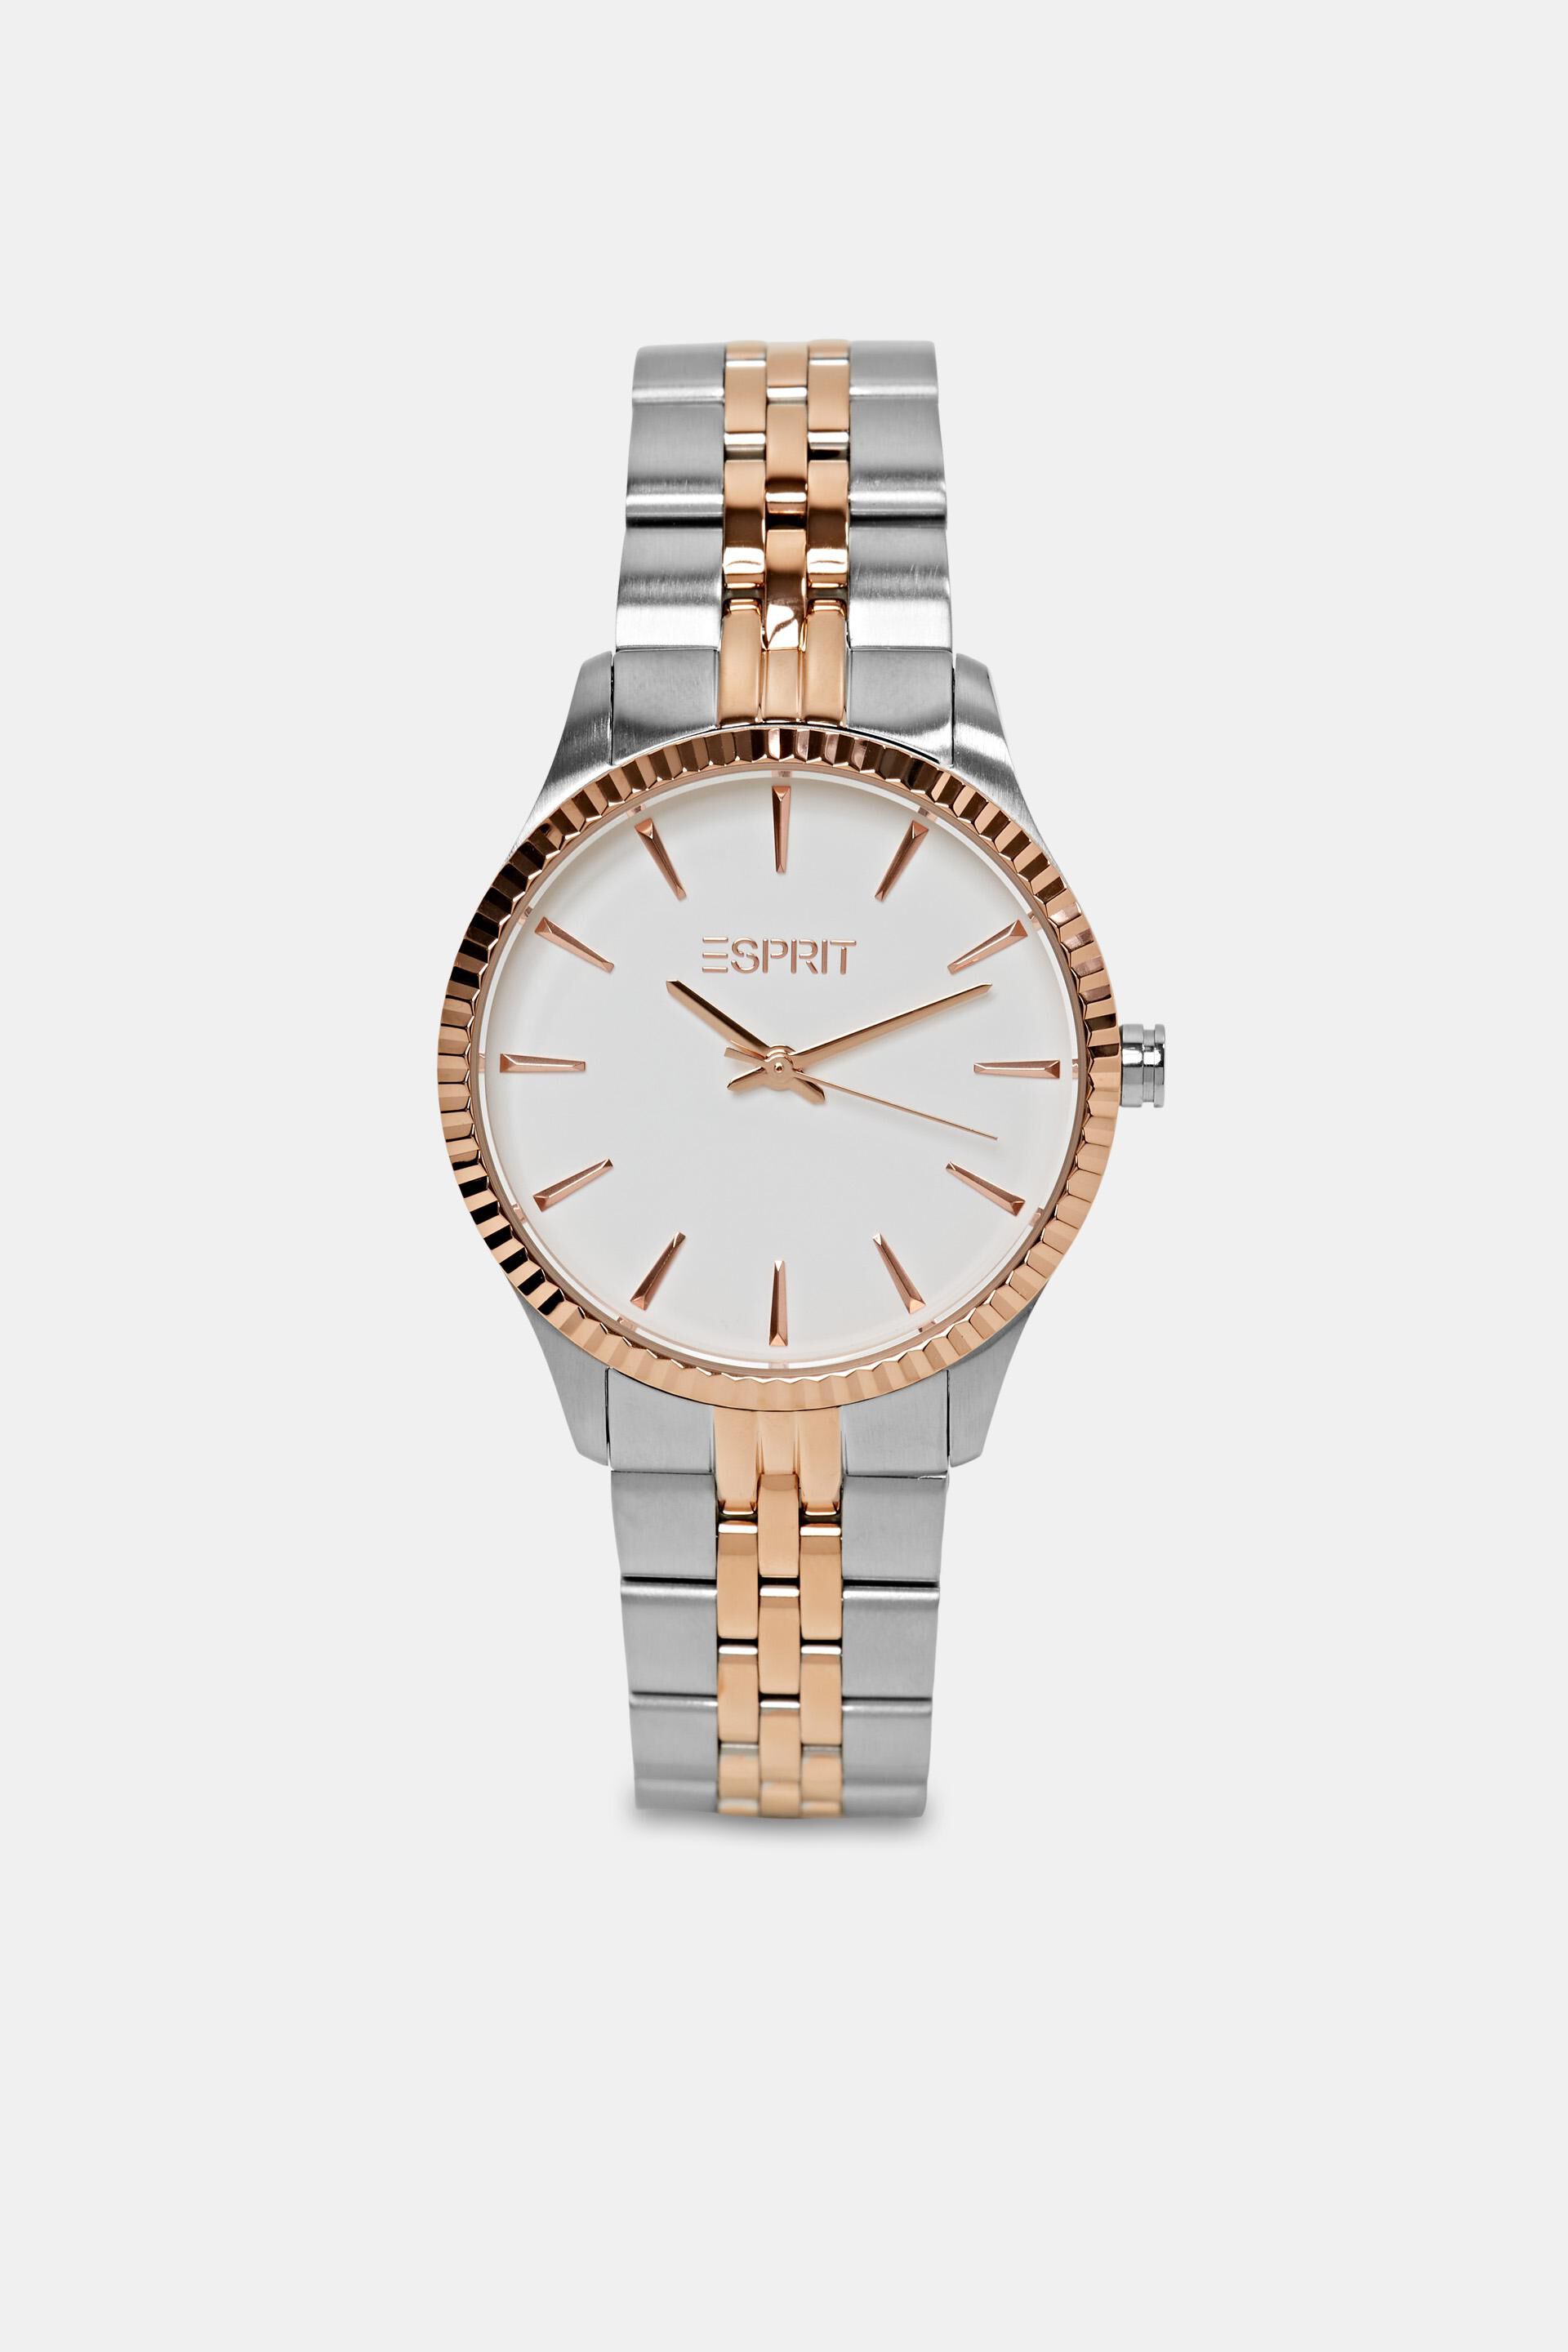 Esprit a watch with Bi-colour corrugated bezel